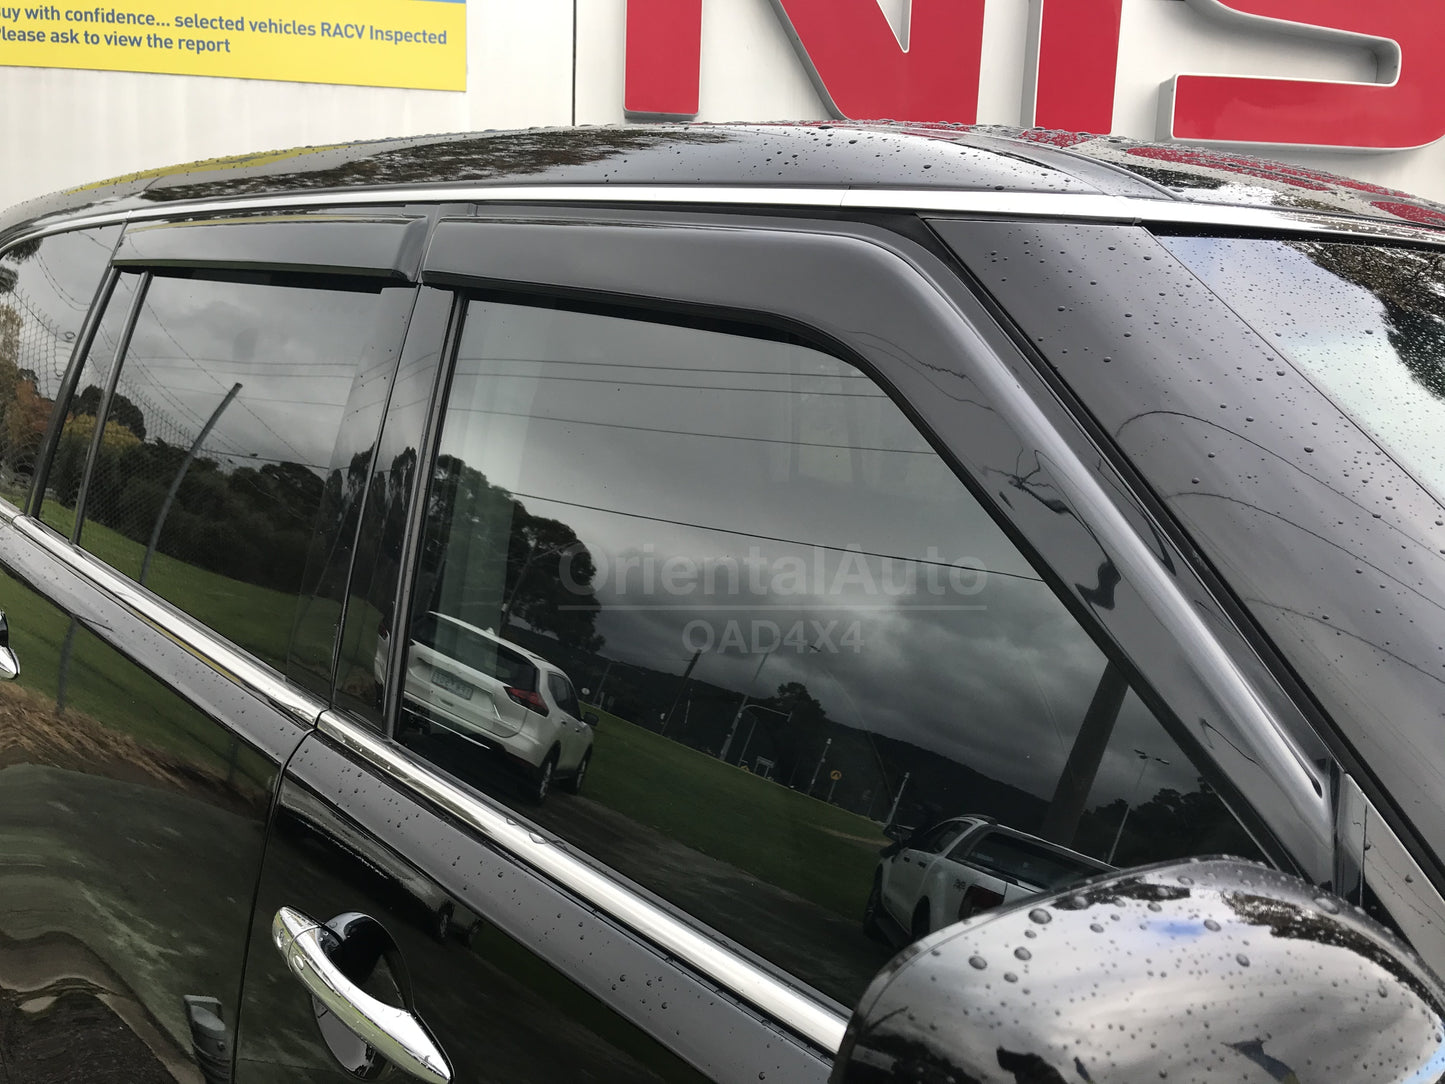 Injection Bonnet Protector & Luxury Weathershields for Nissan Patrol Y62 2012-2019 Weather Shields Window Visor Hood Protector Guard